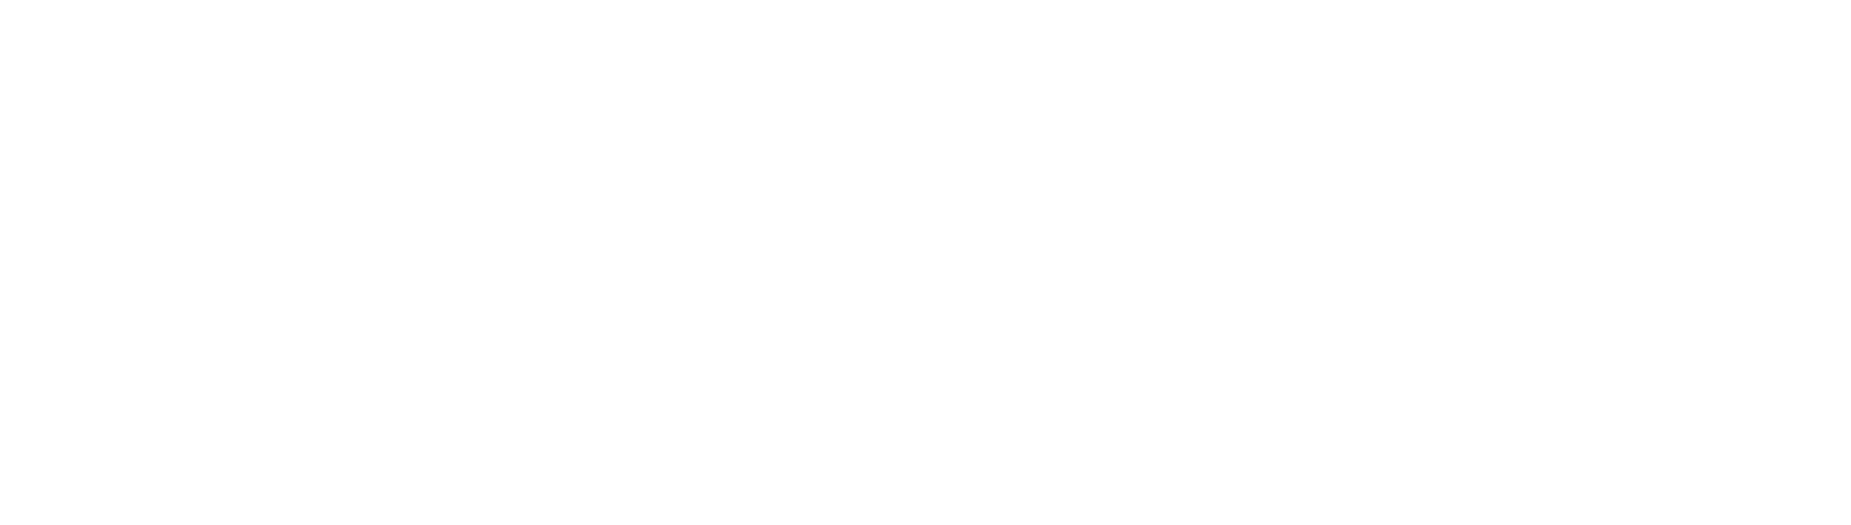 Cubase icon